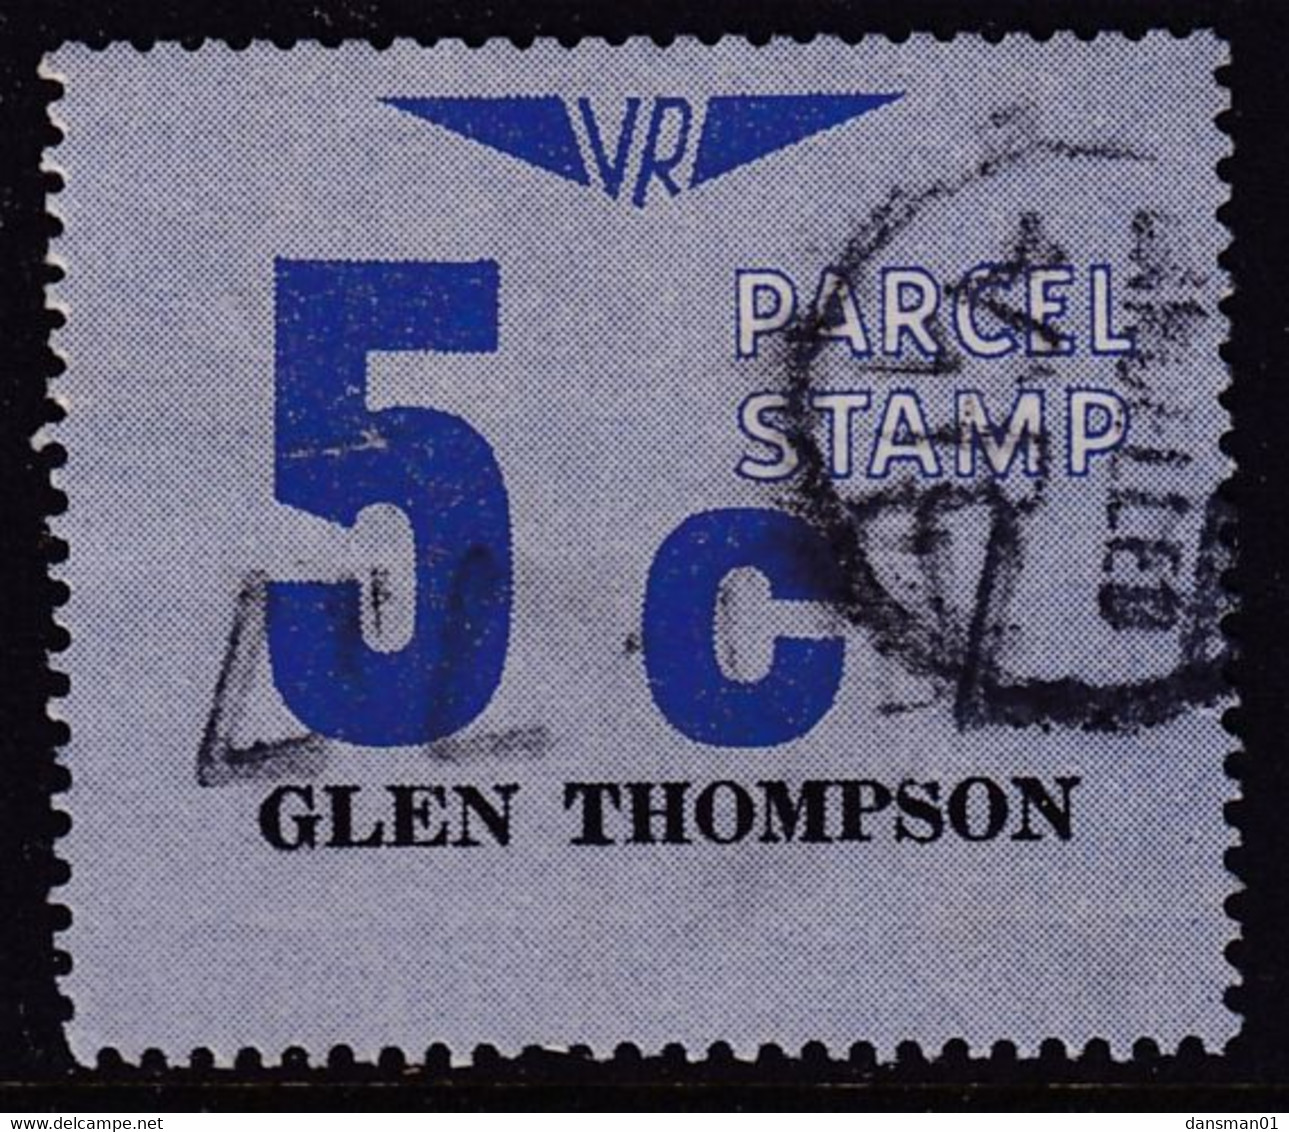 Victoria 1966 Railway Parcel Stamp 5c GLEN THOMPSON Used - Variedades Y Curiosidades